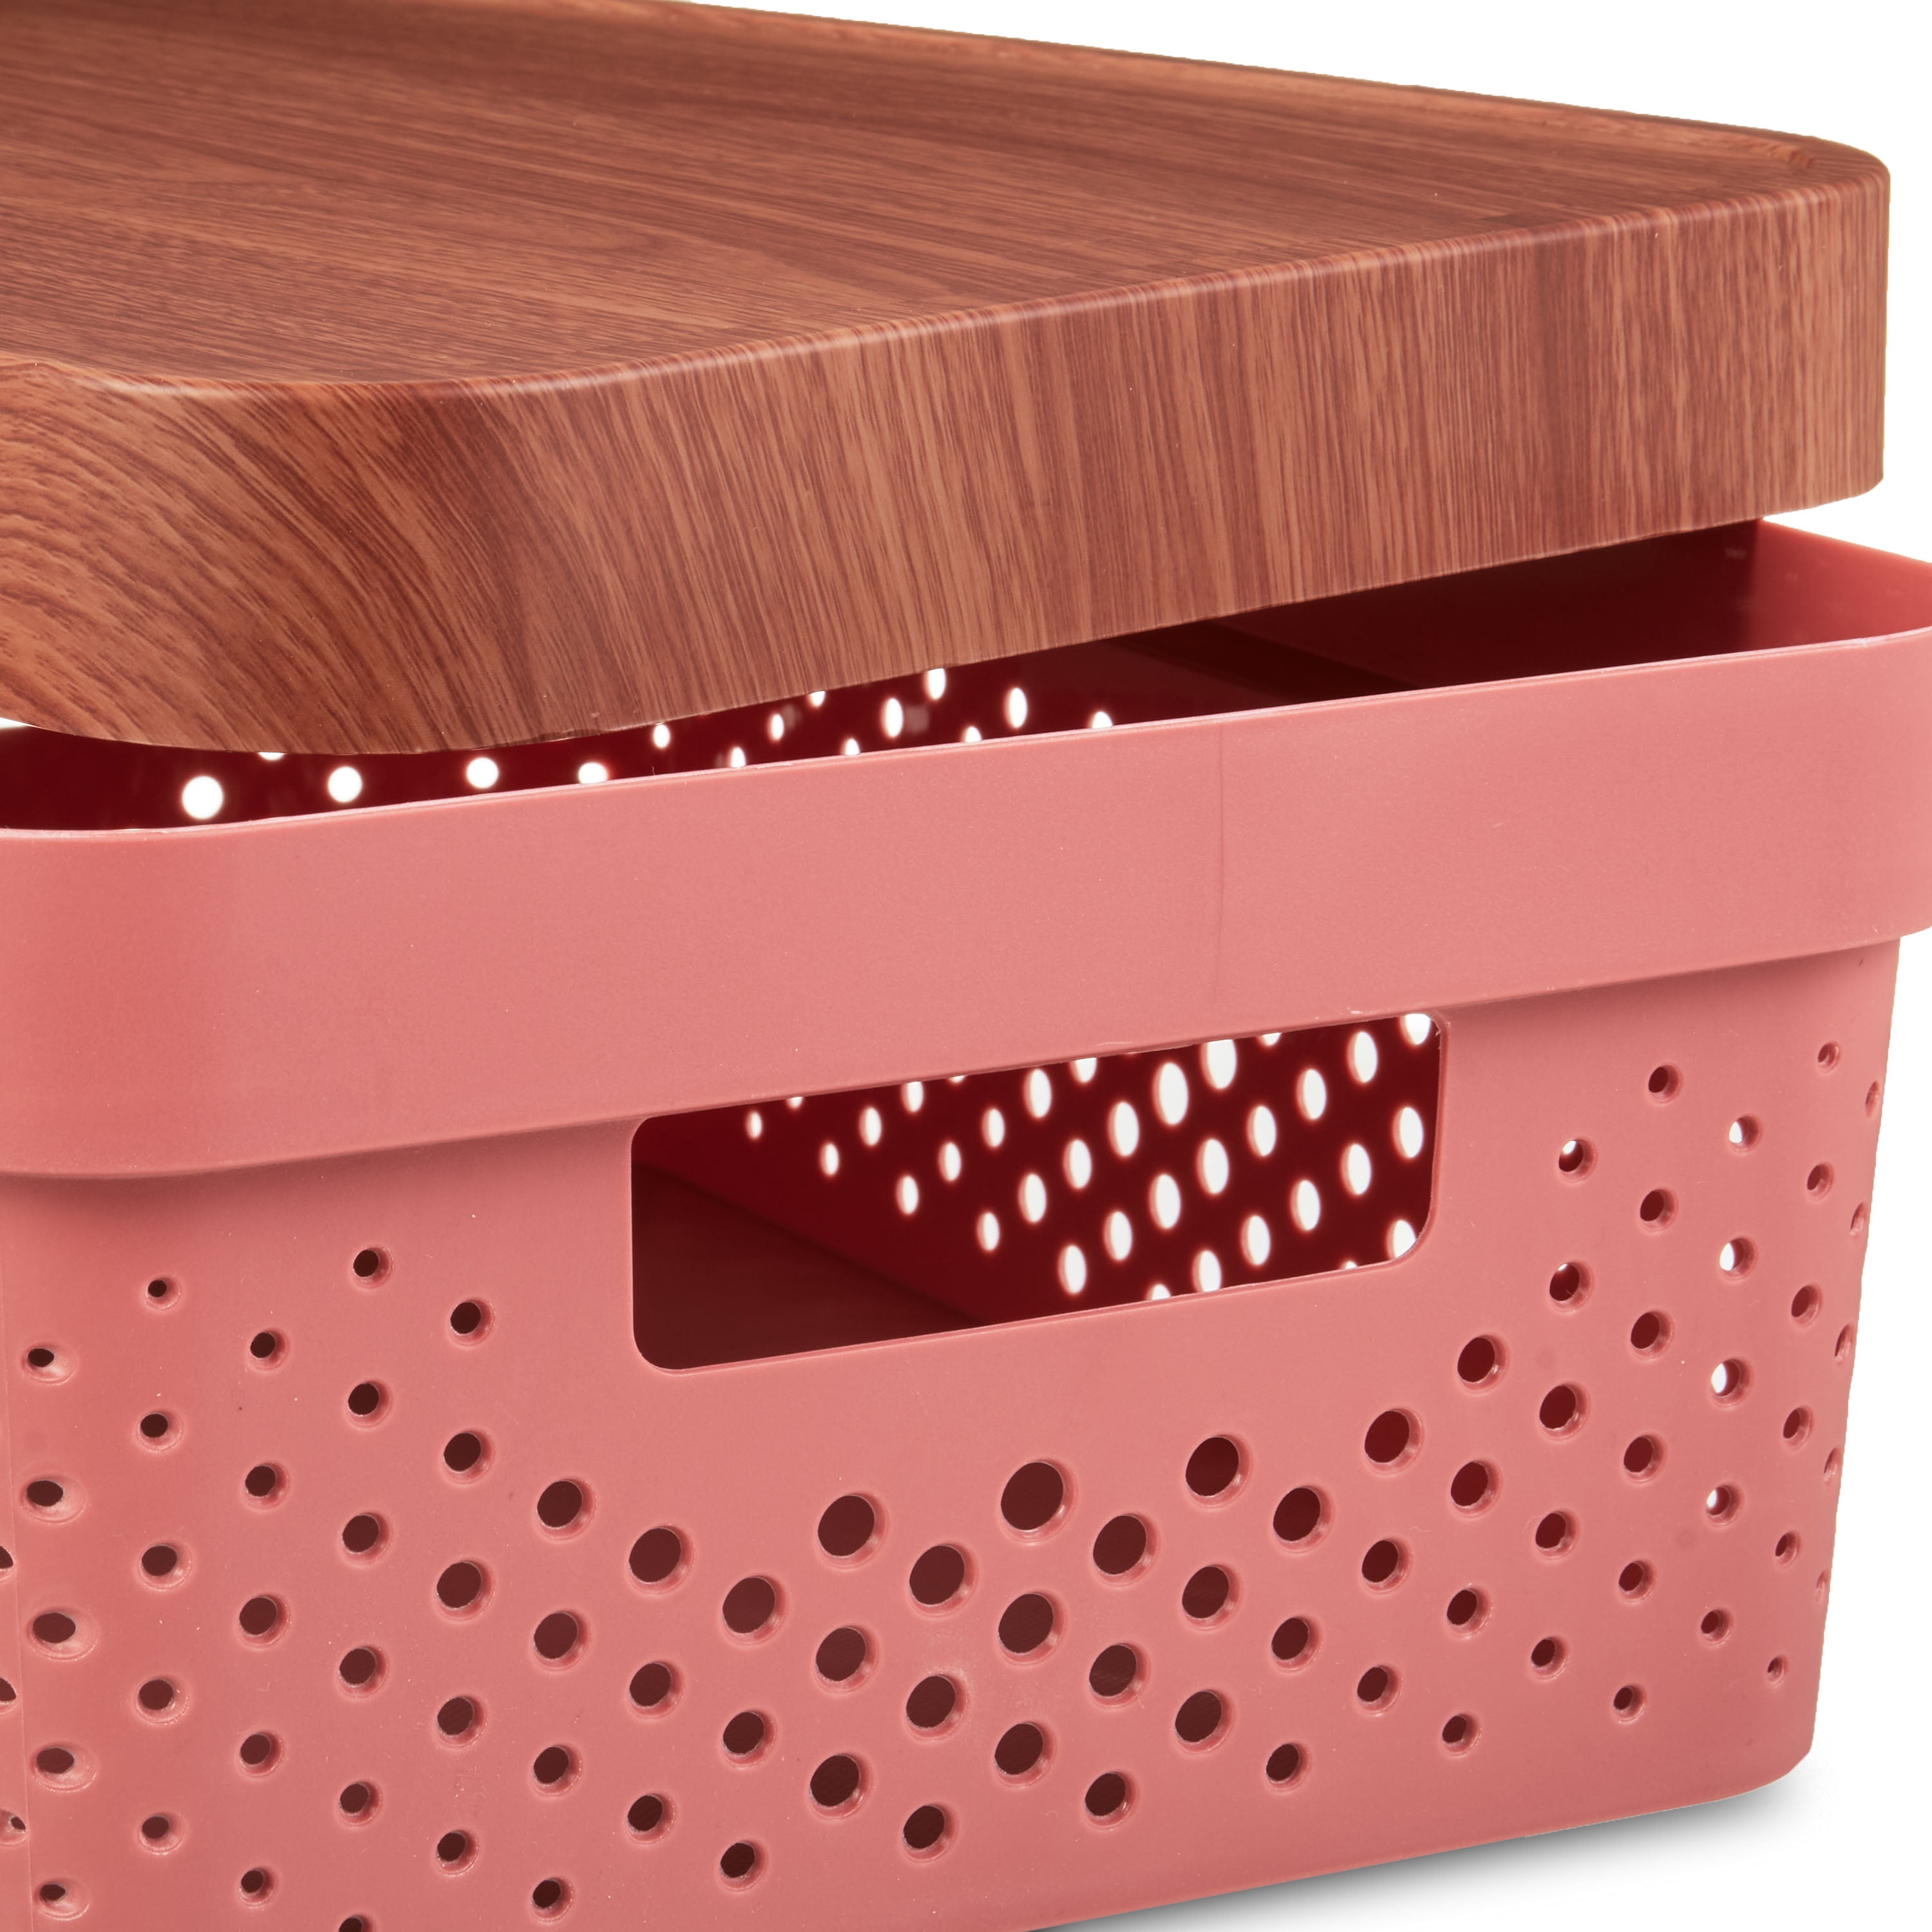 Shop Online Now Pen+Gear Organizational Storage Box with Woodgrain